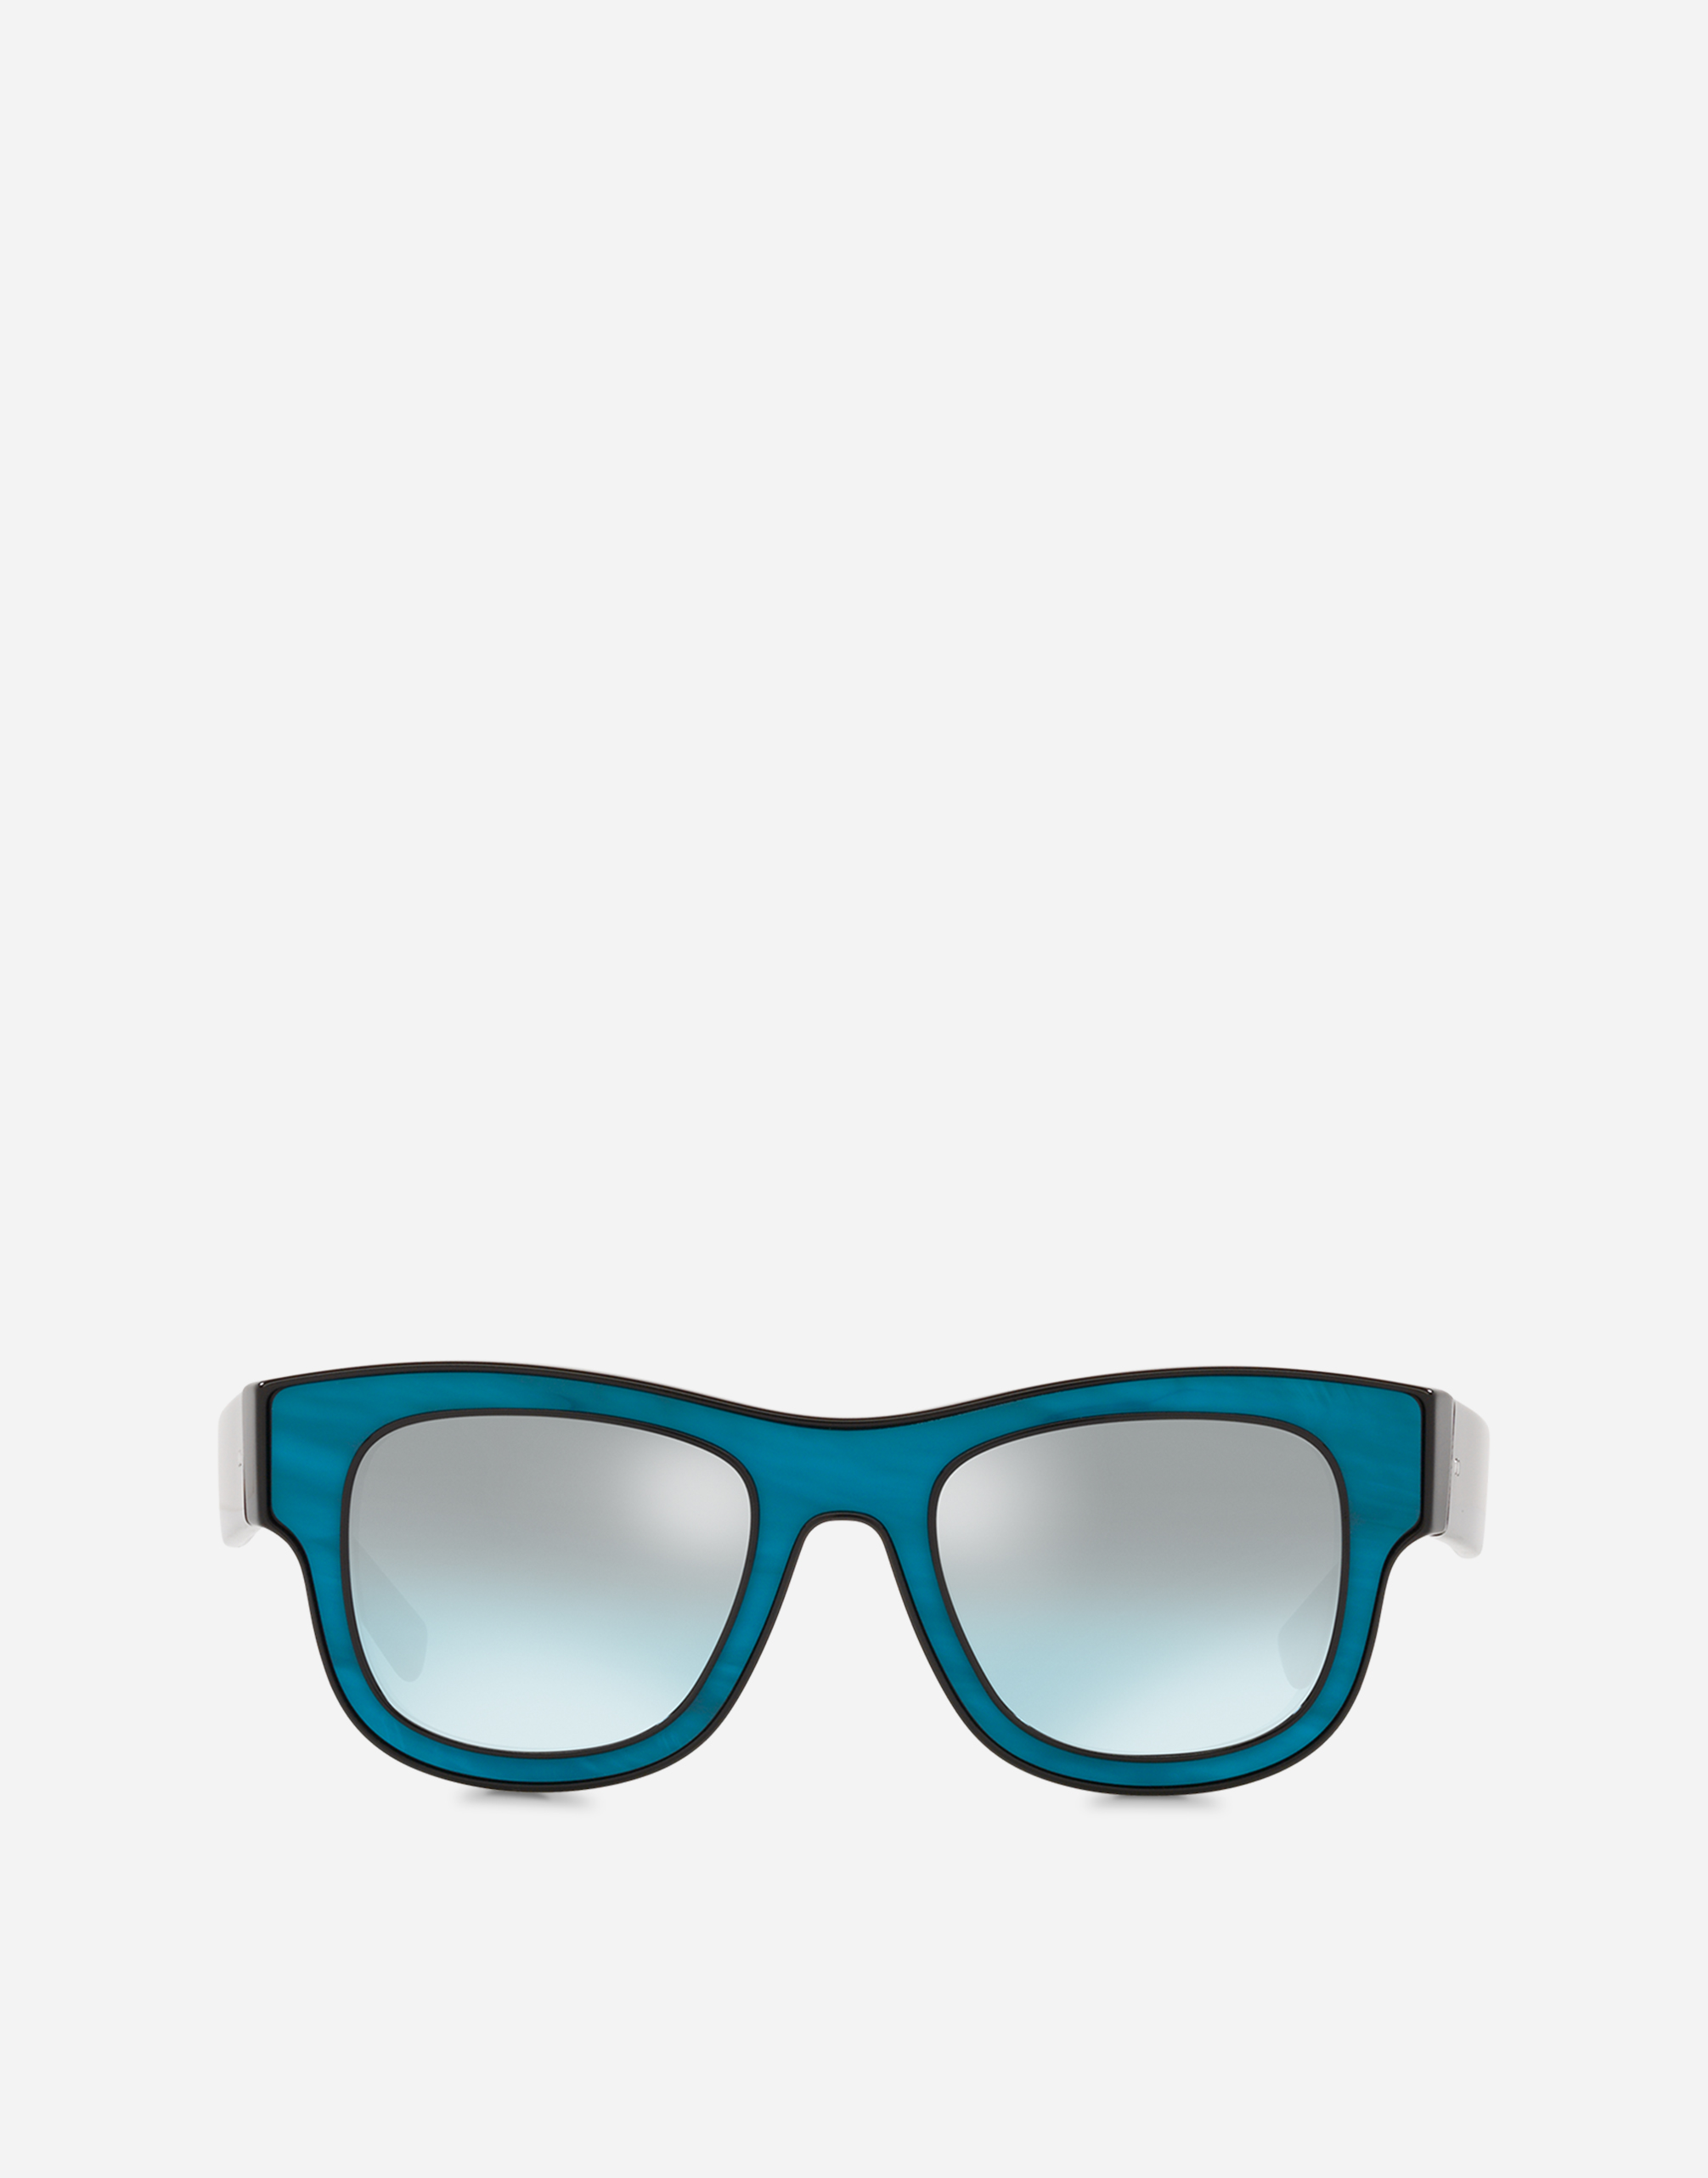 Domenico deep sunglasses in Turquoise